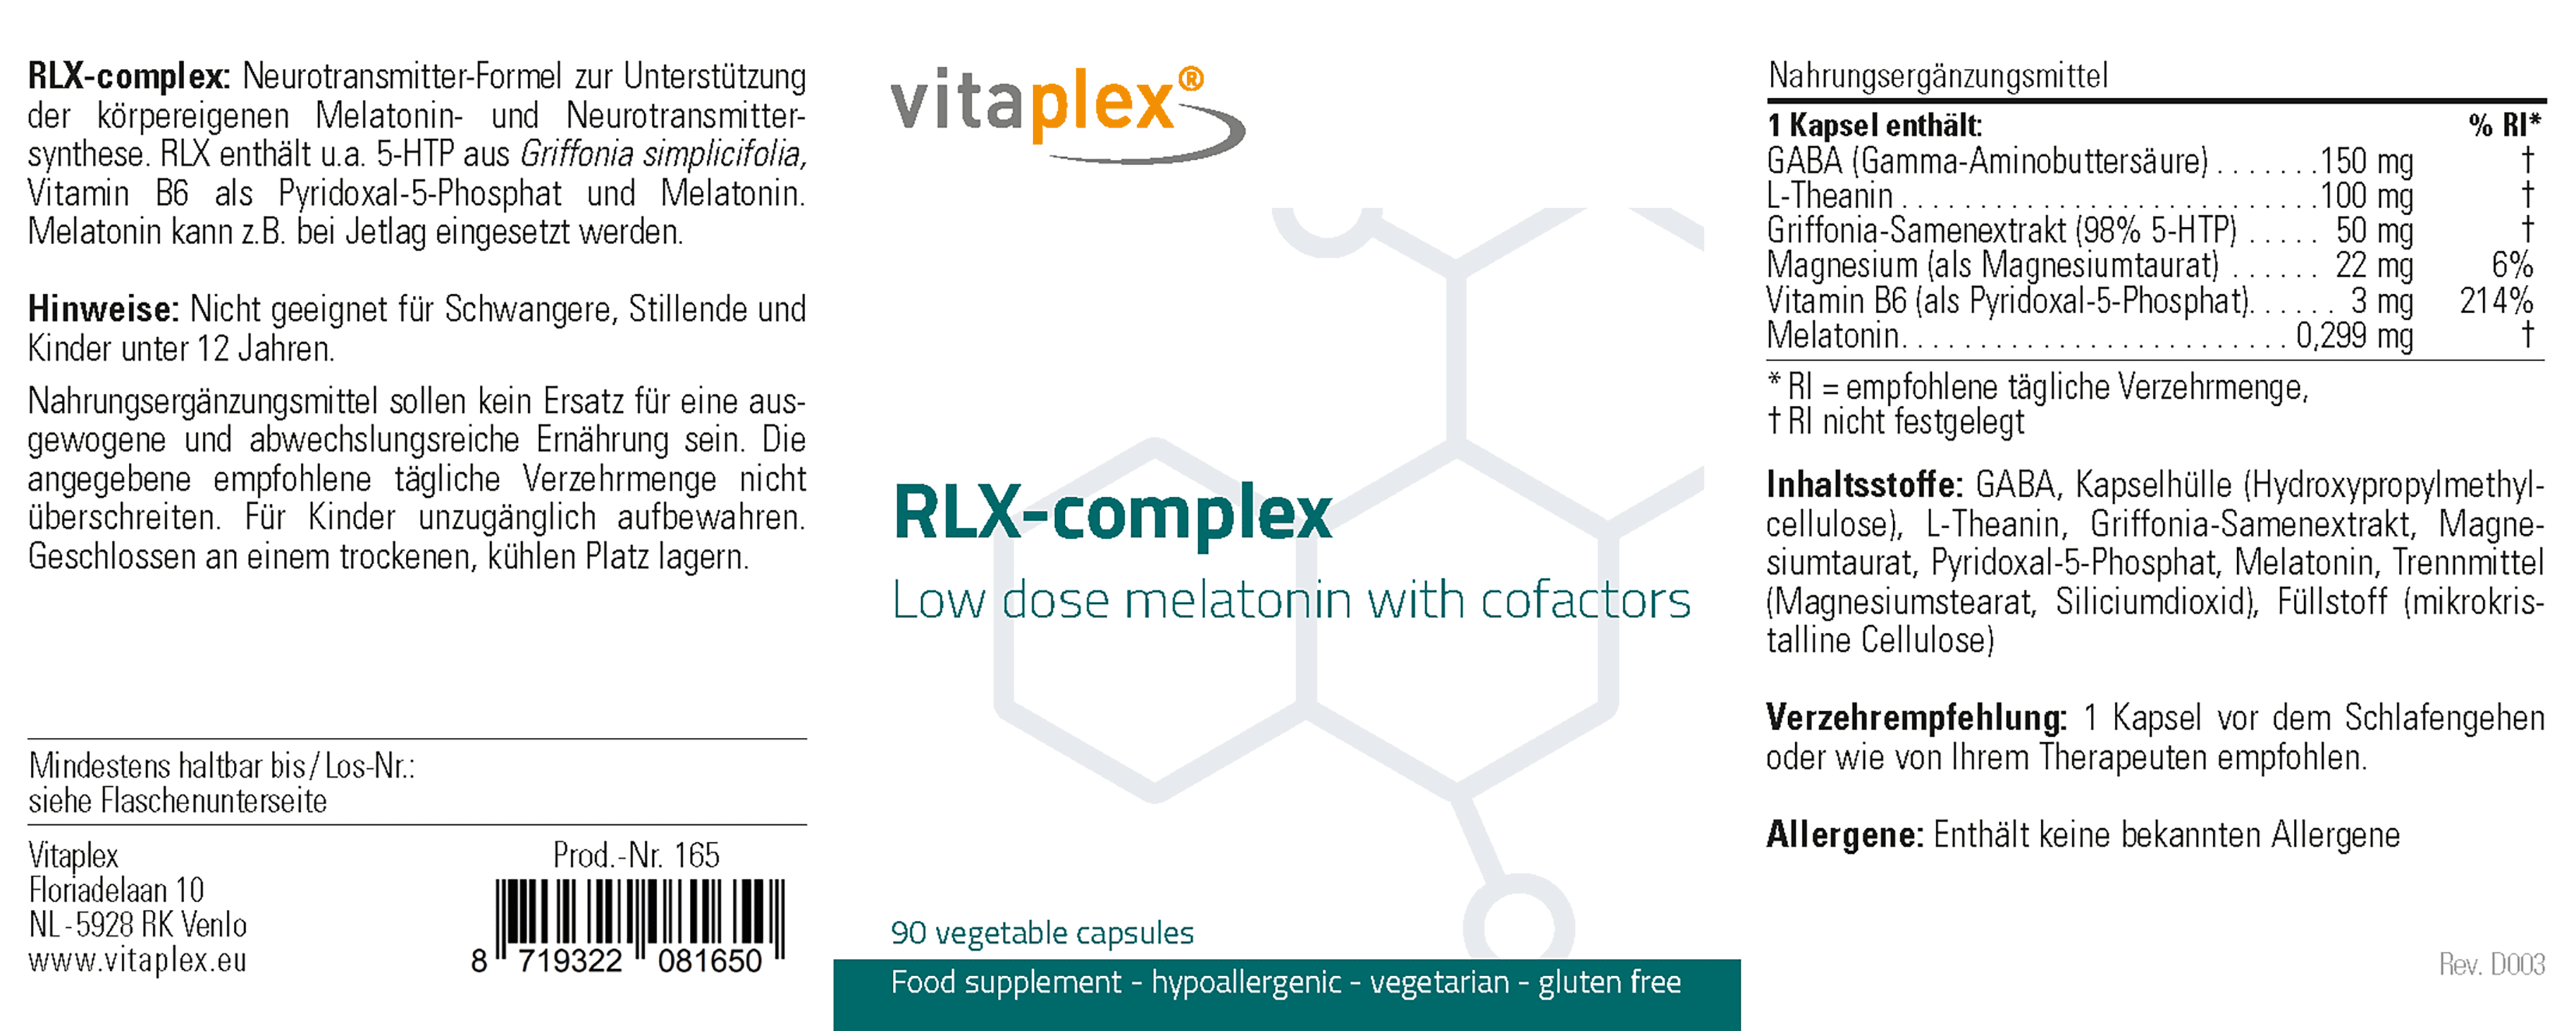 RLX-complex 